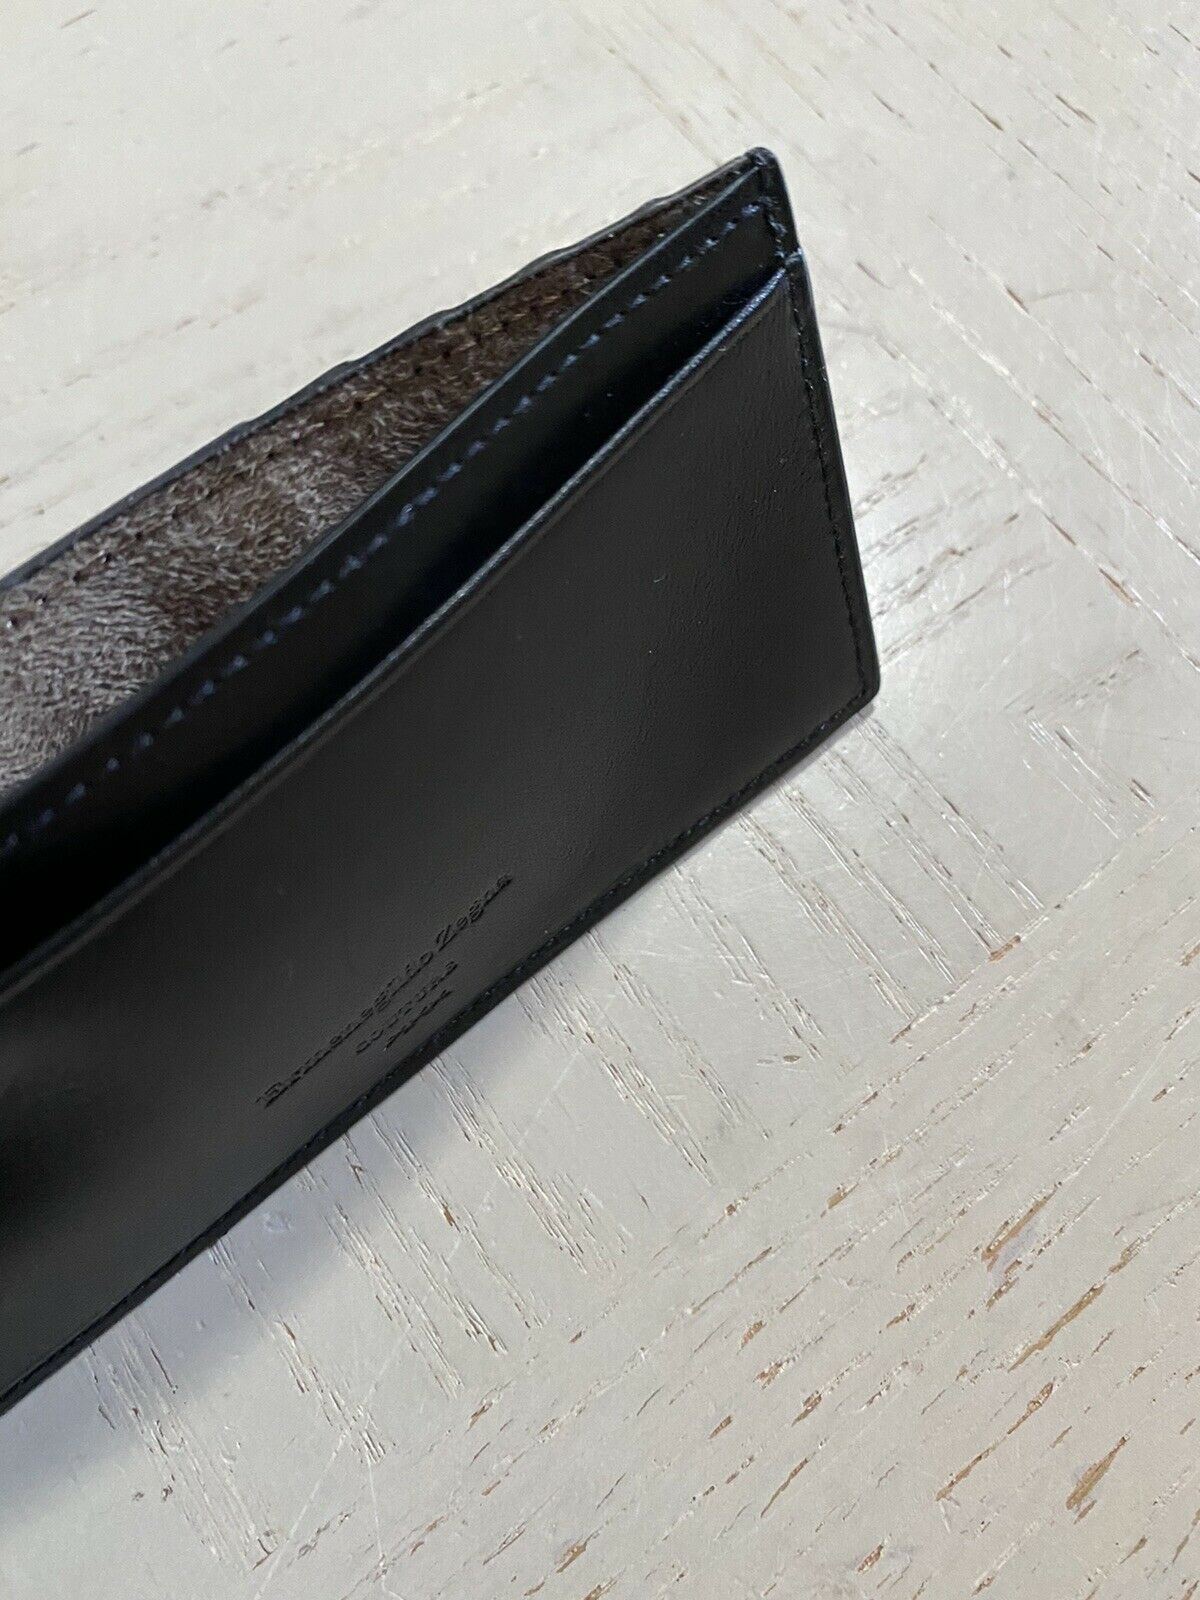 New $750 Ermenegildo Zegna Couture Pouch Wallet Black Italy